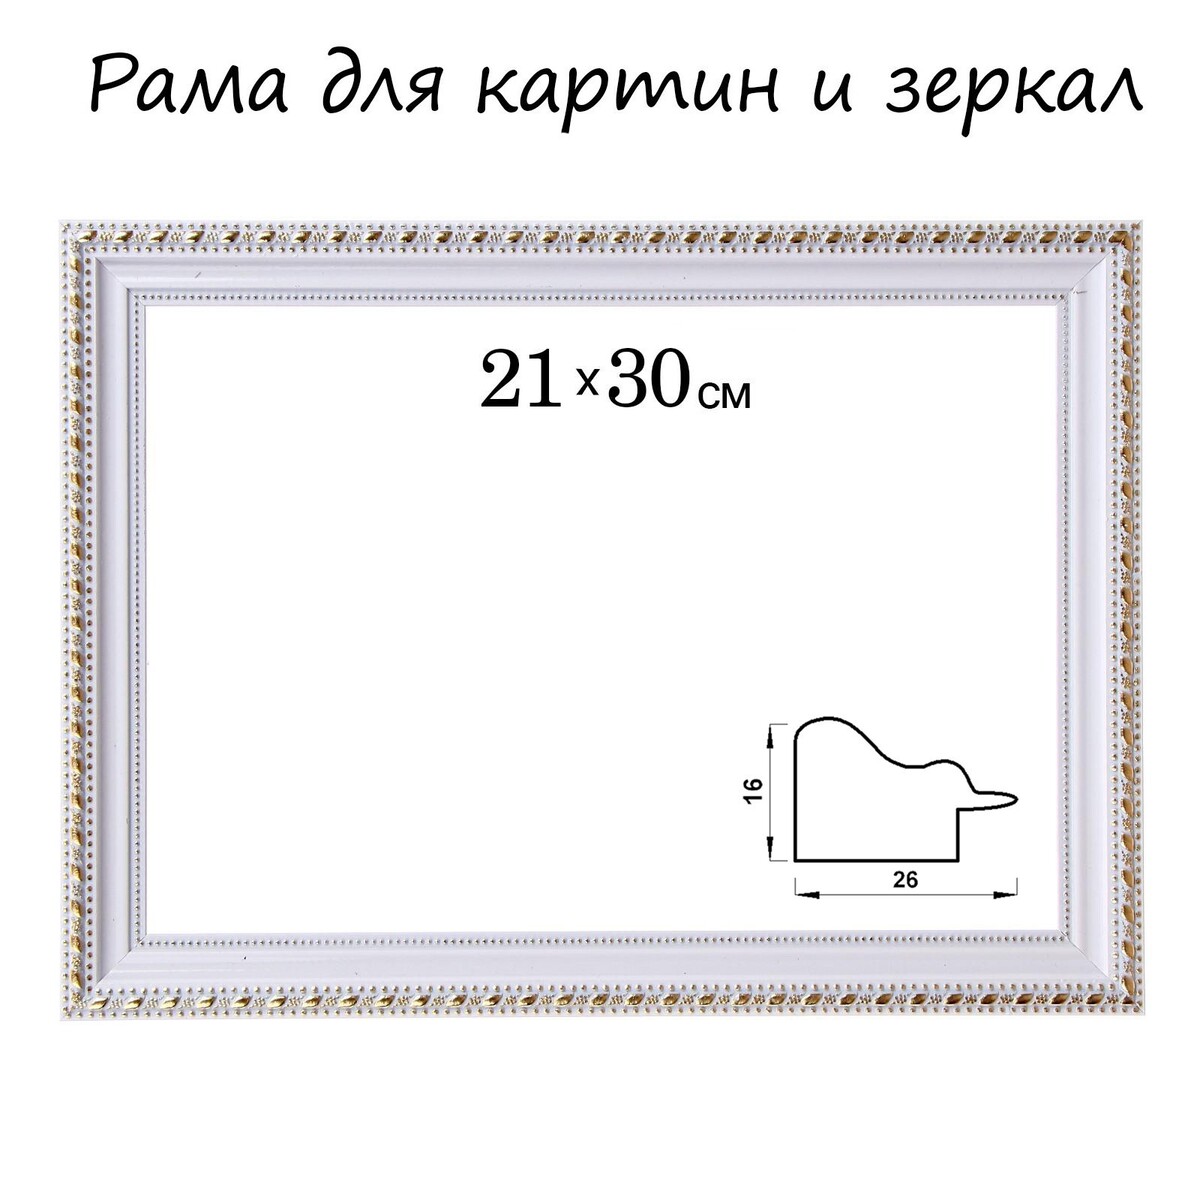 Рама для картин (зеркал) 21 х 30 х 2,6 см, пластиковая, calligrata 6429, бело-золотая журнал золотая палитра 1 8 2013